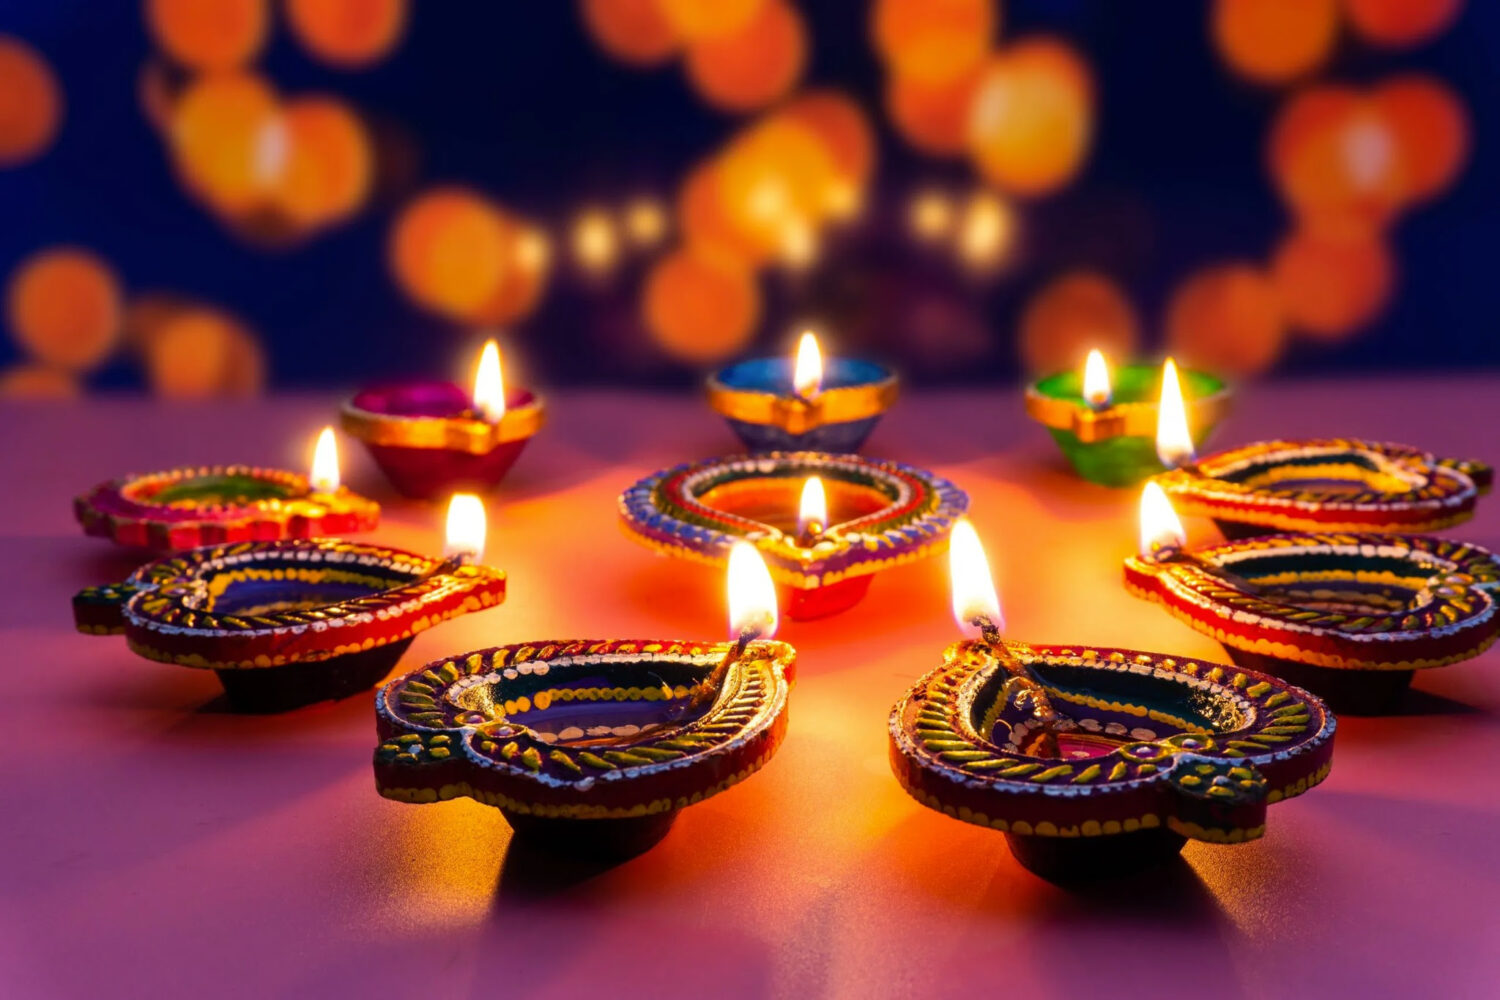 Diwali - The Festival of Lights Celebration